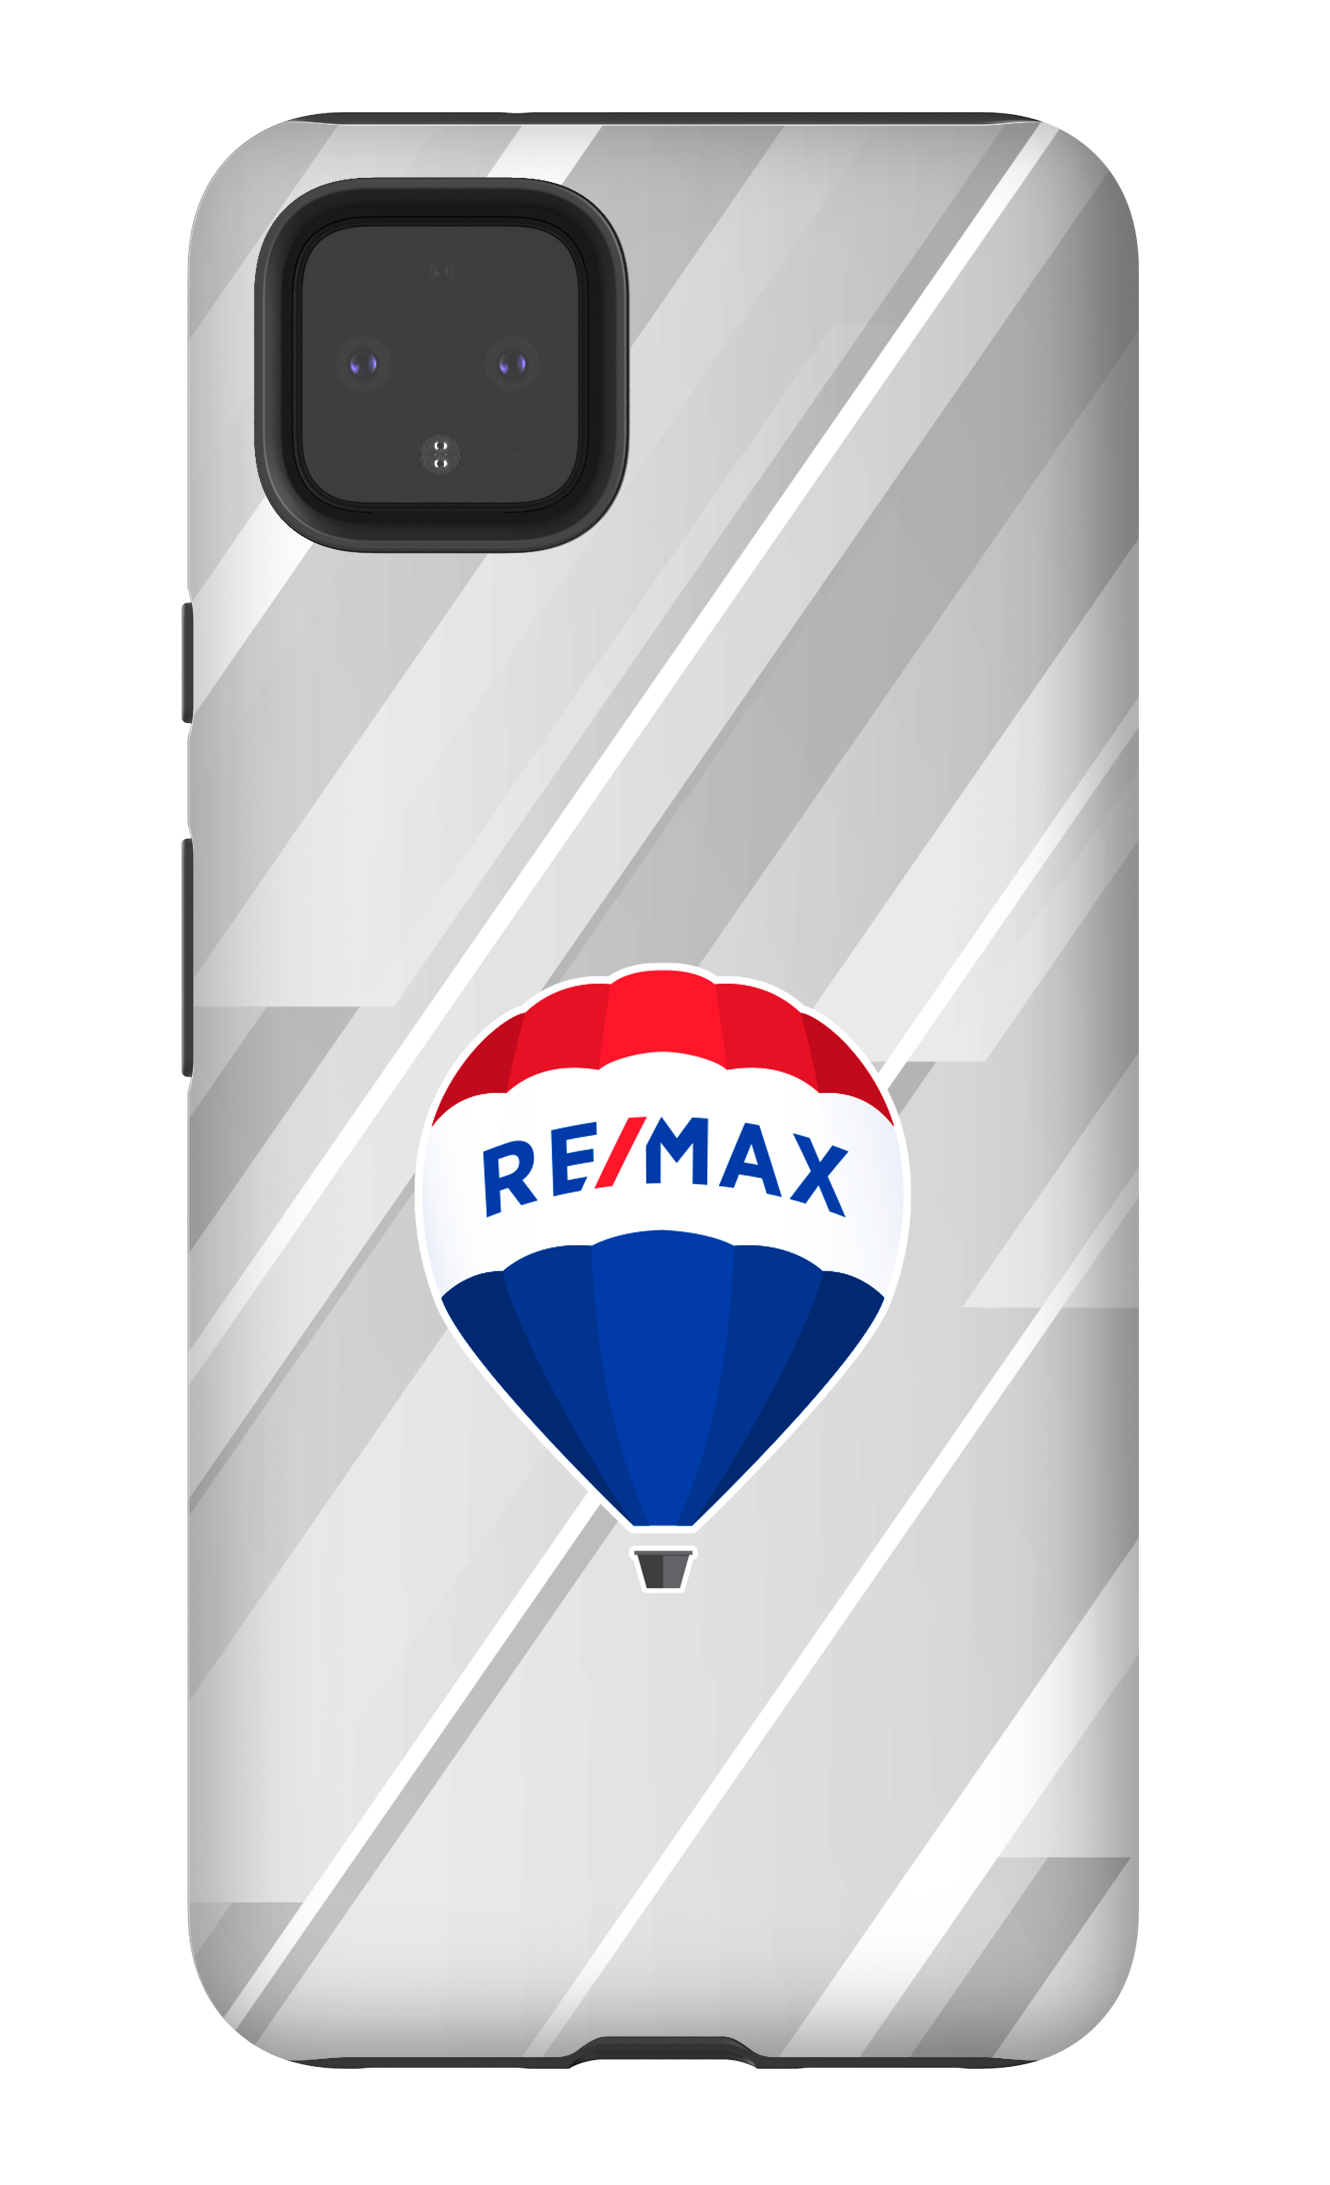 Remax Blanc - Google Pixel 4 XL